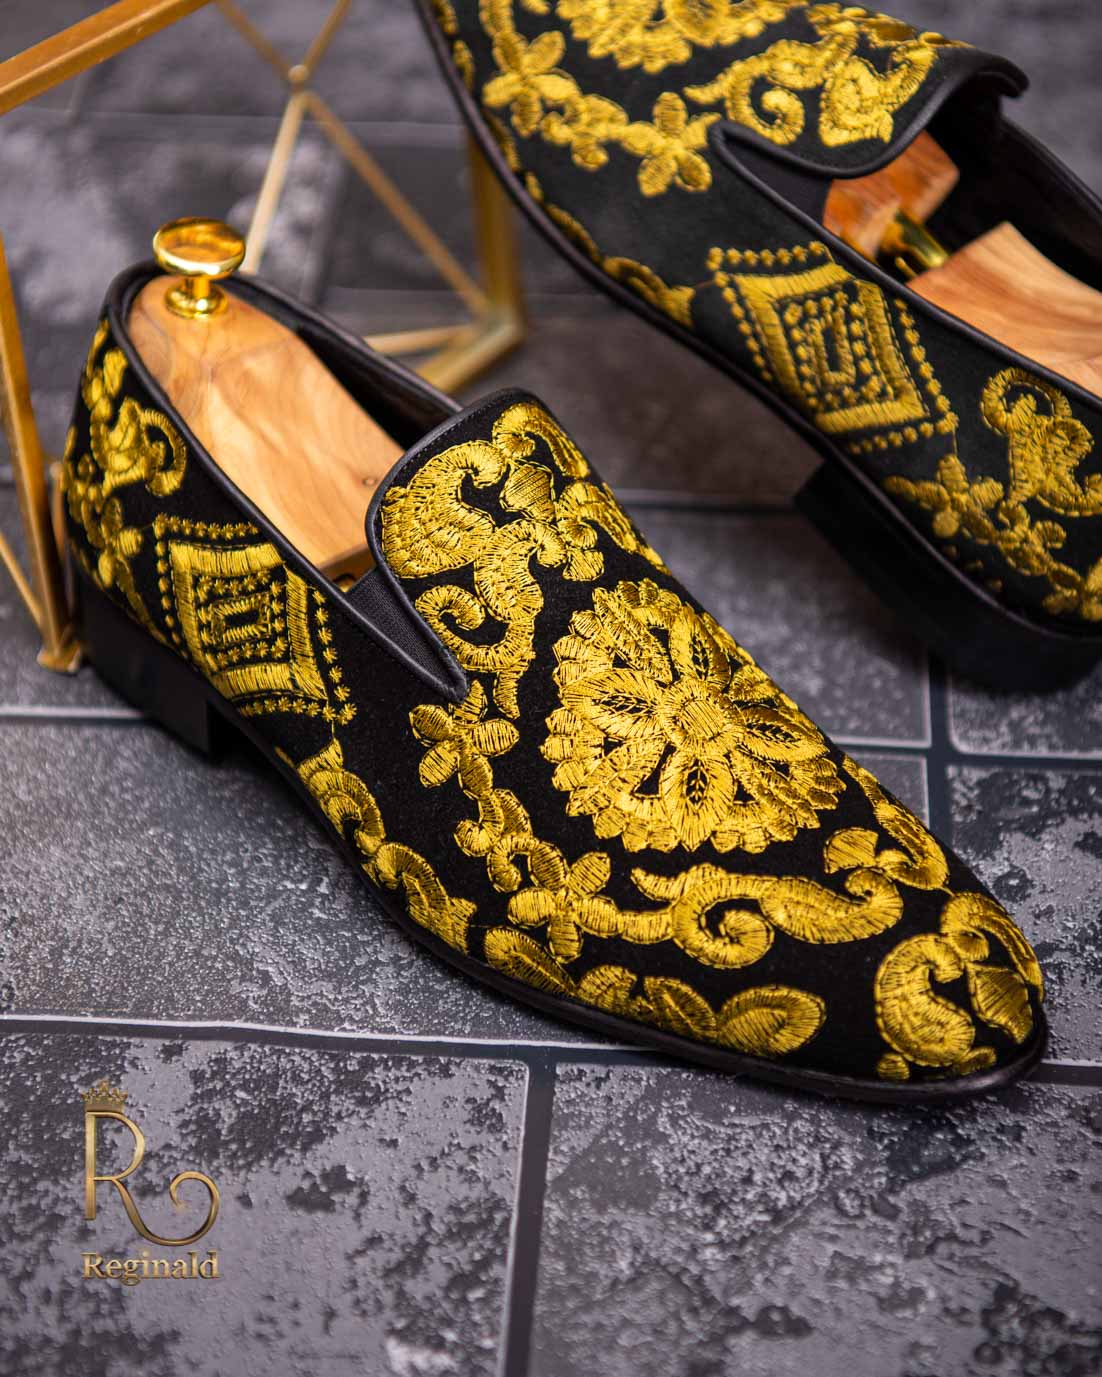 Pantofi Loafers de barbati din piele naturala, negri, brodati fir auriu - P1352